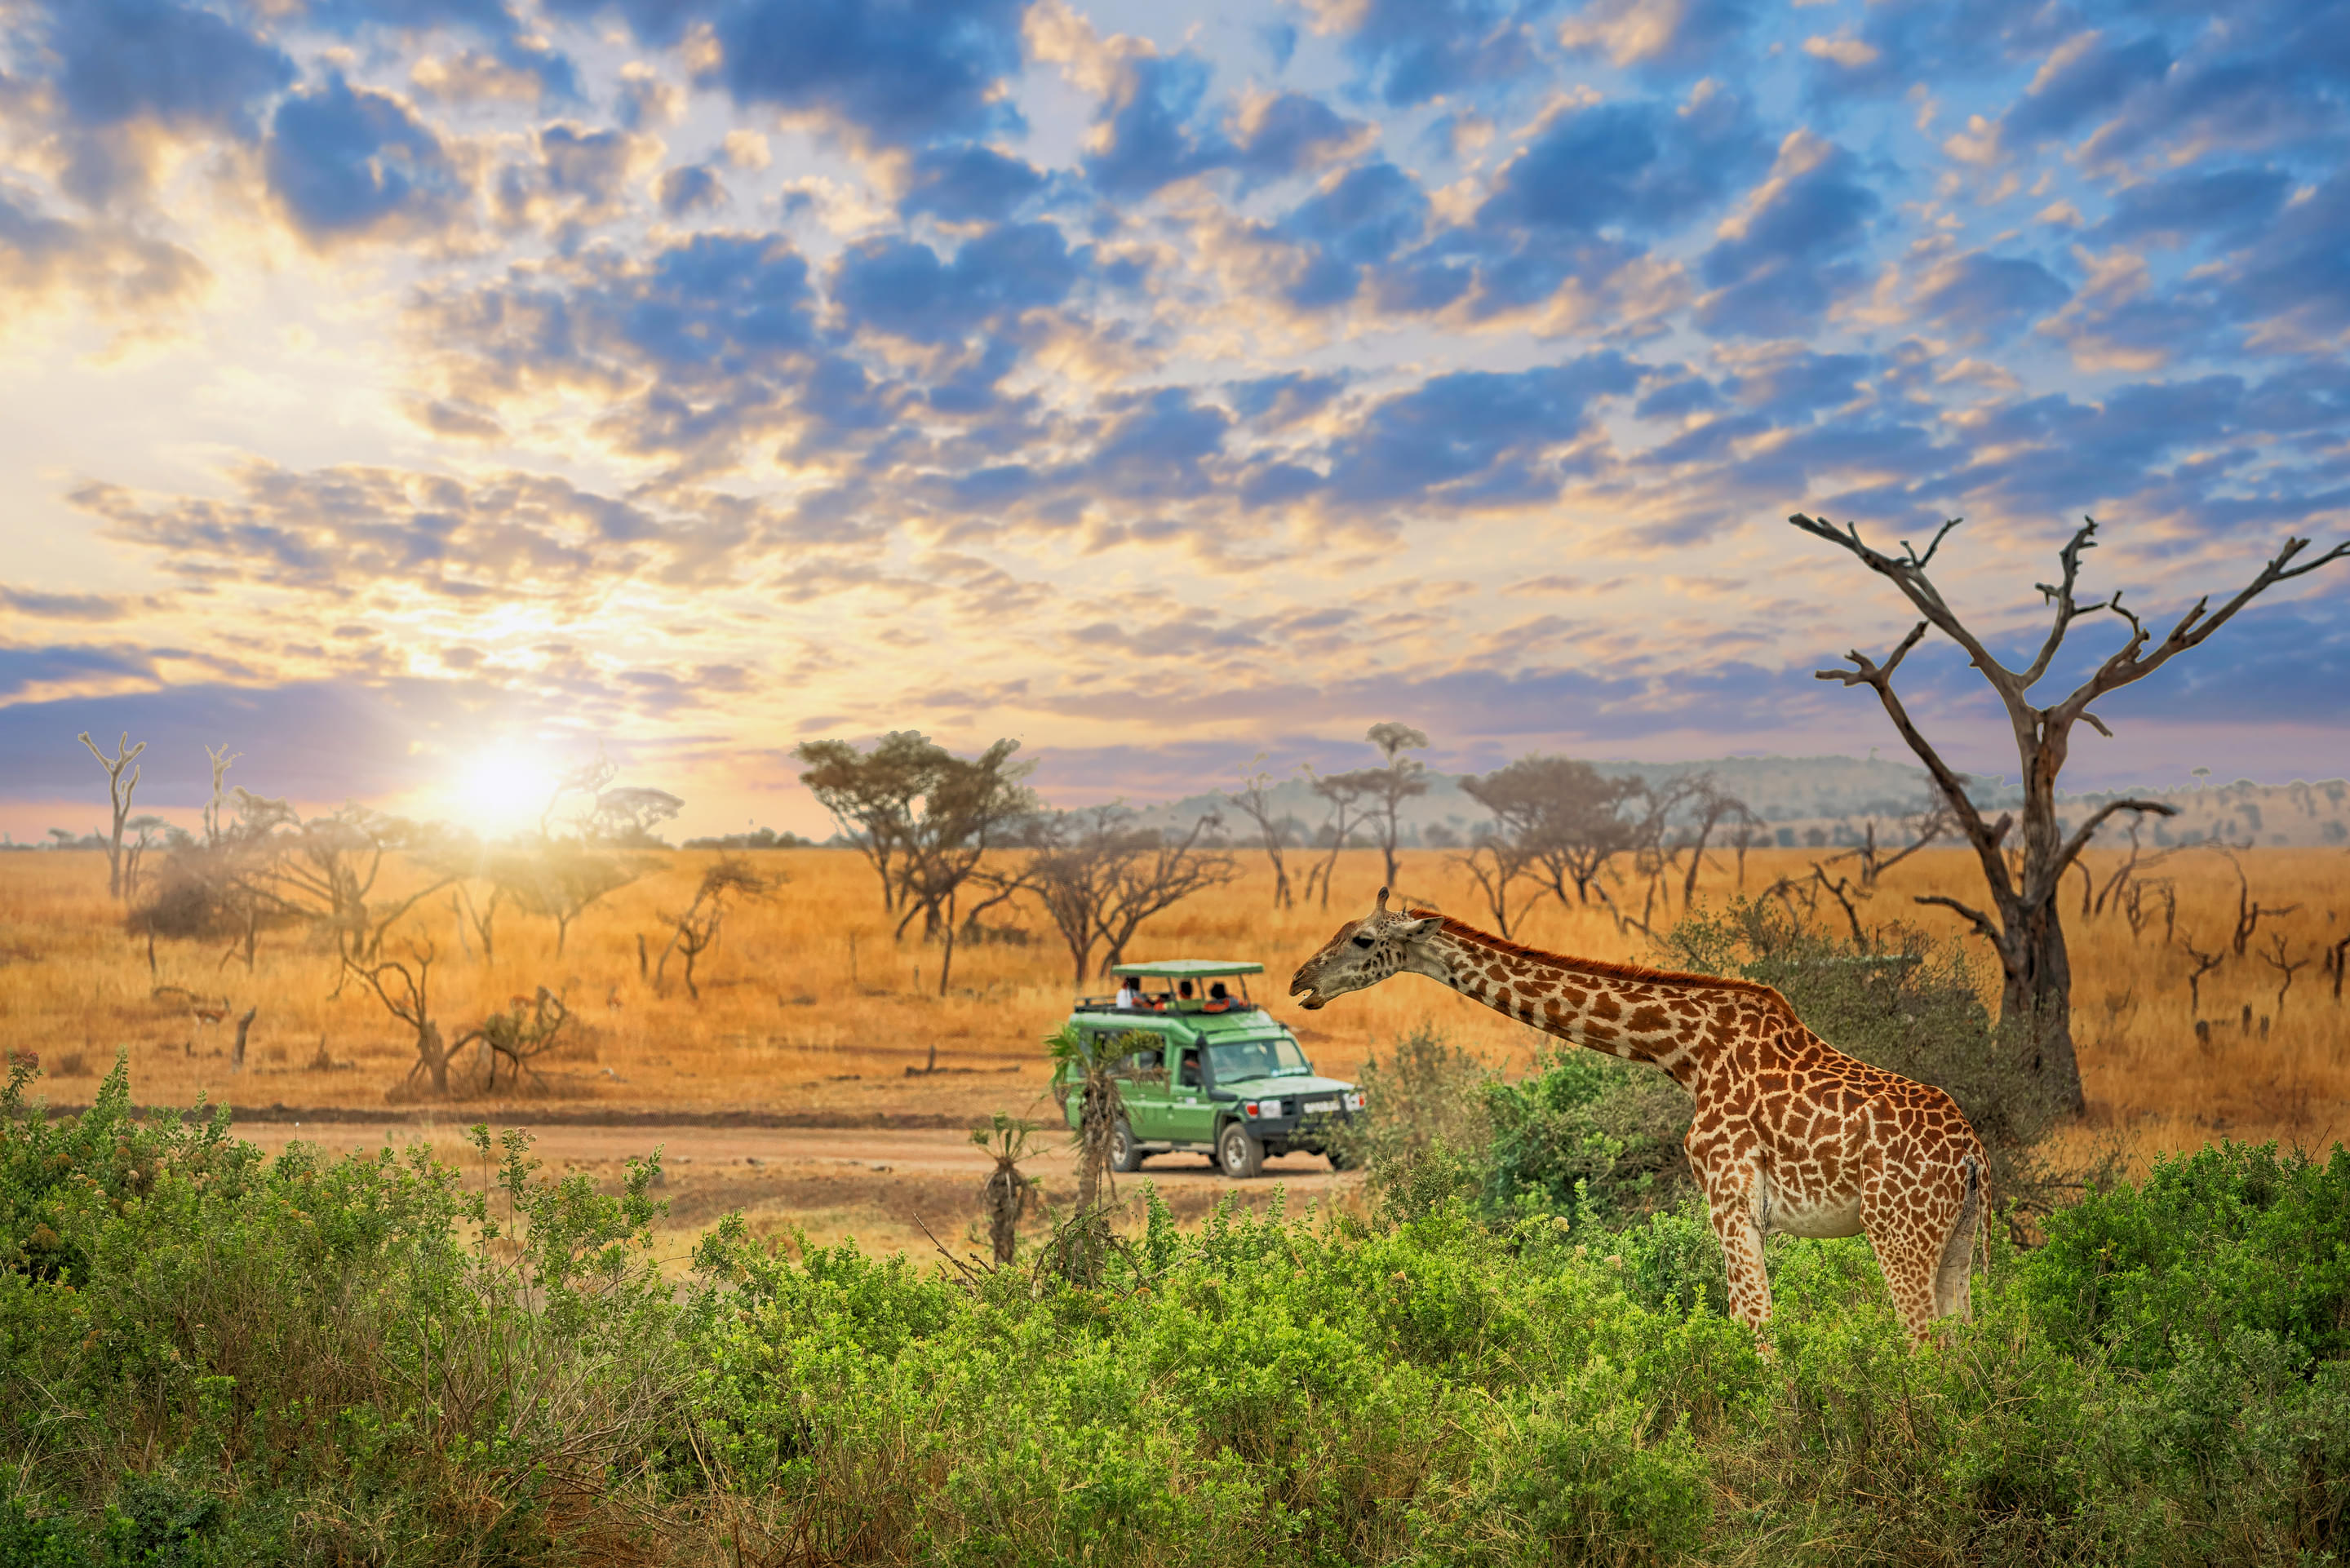 Serengeti National Park Overview